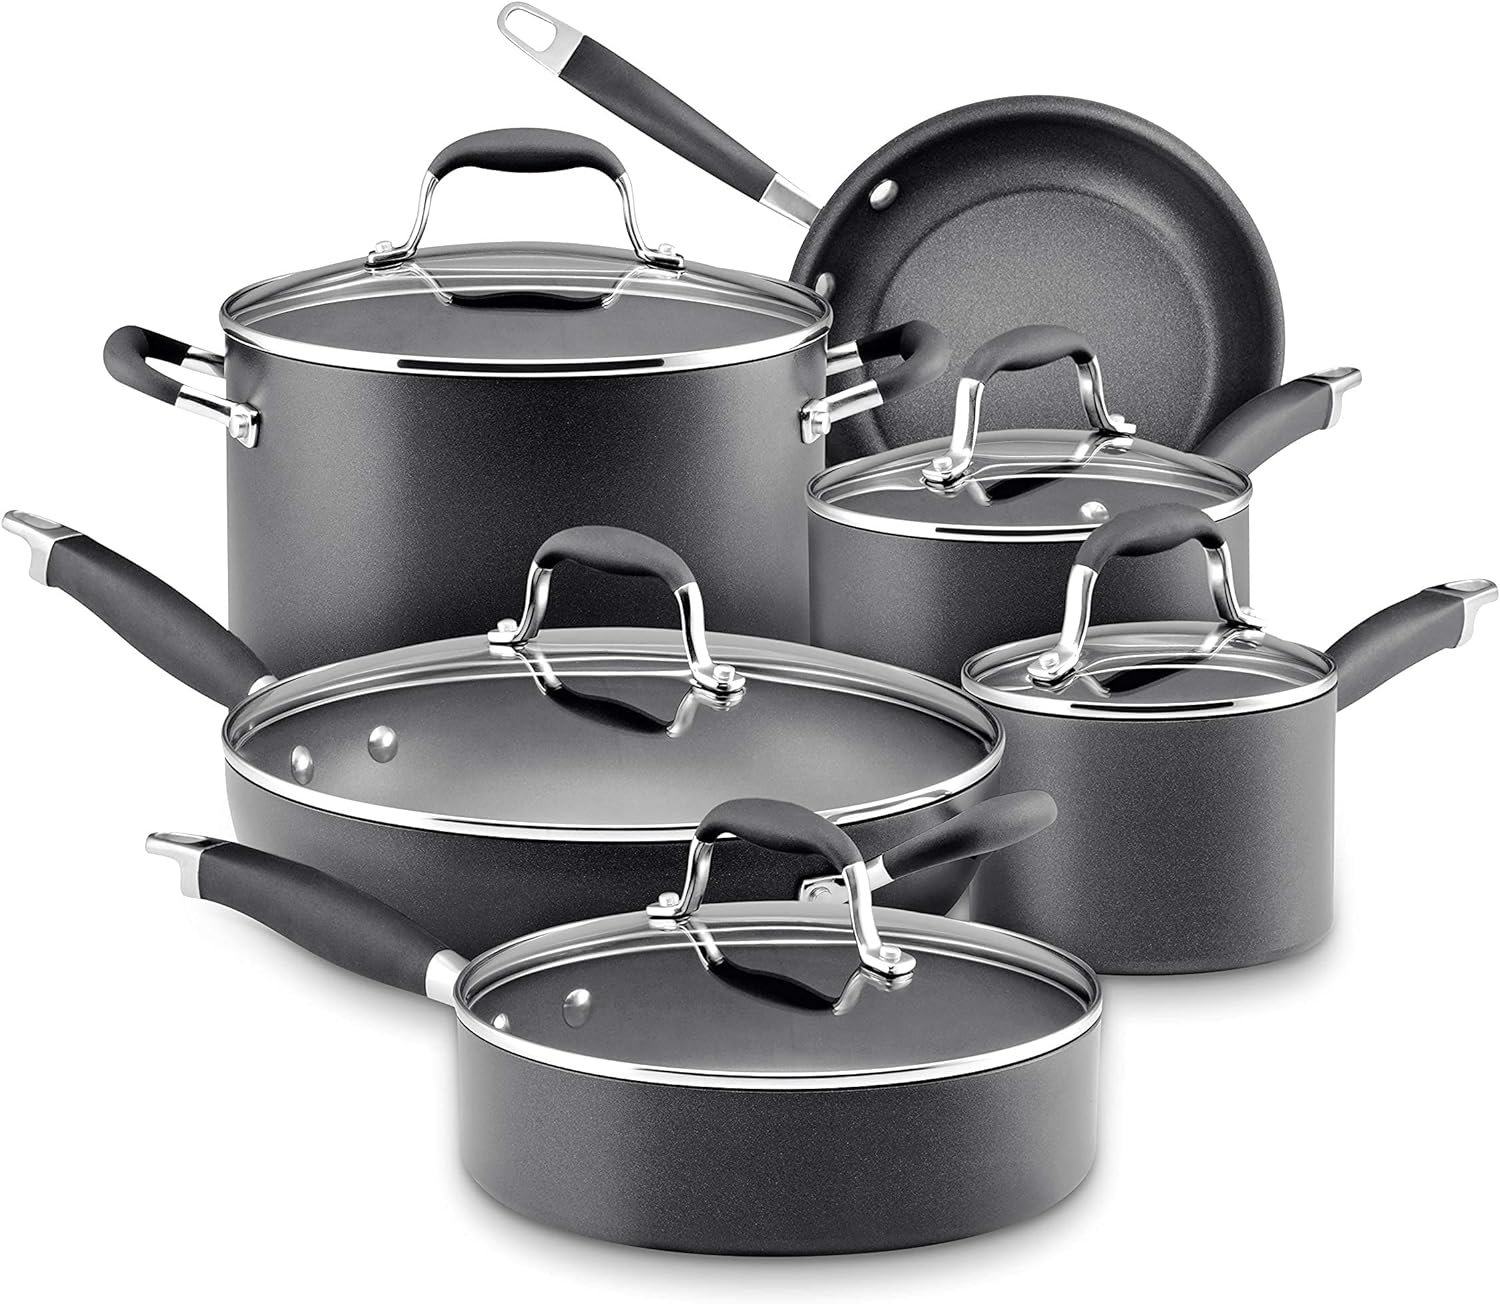 Anolon Advanced Hard Anodized Nonstick Cookware Pots and Pans Set